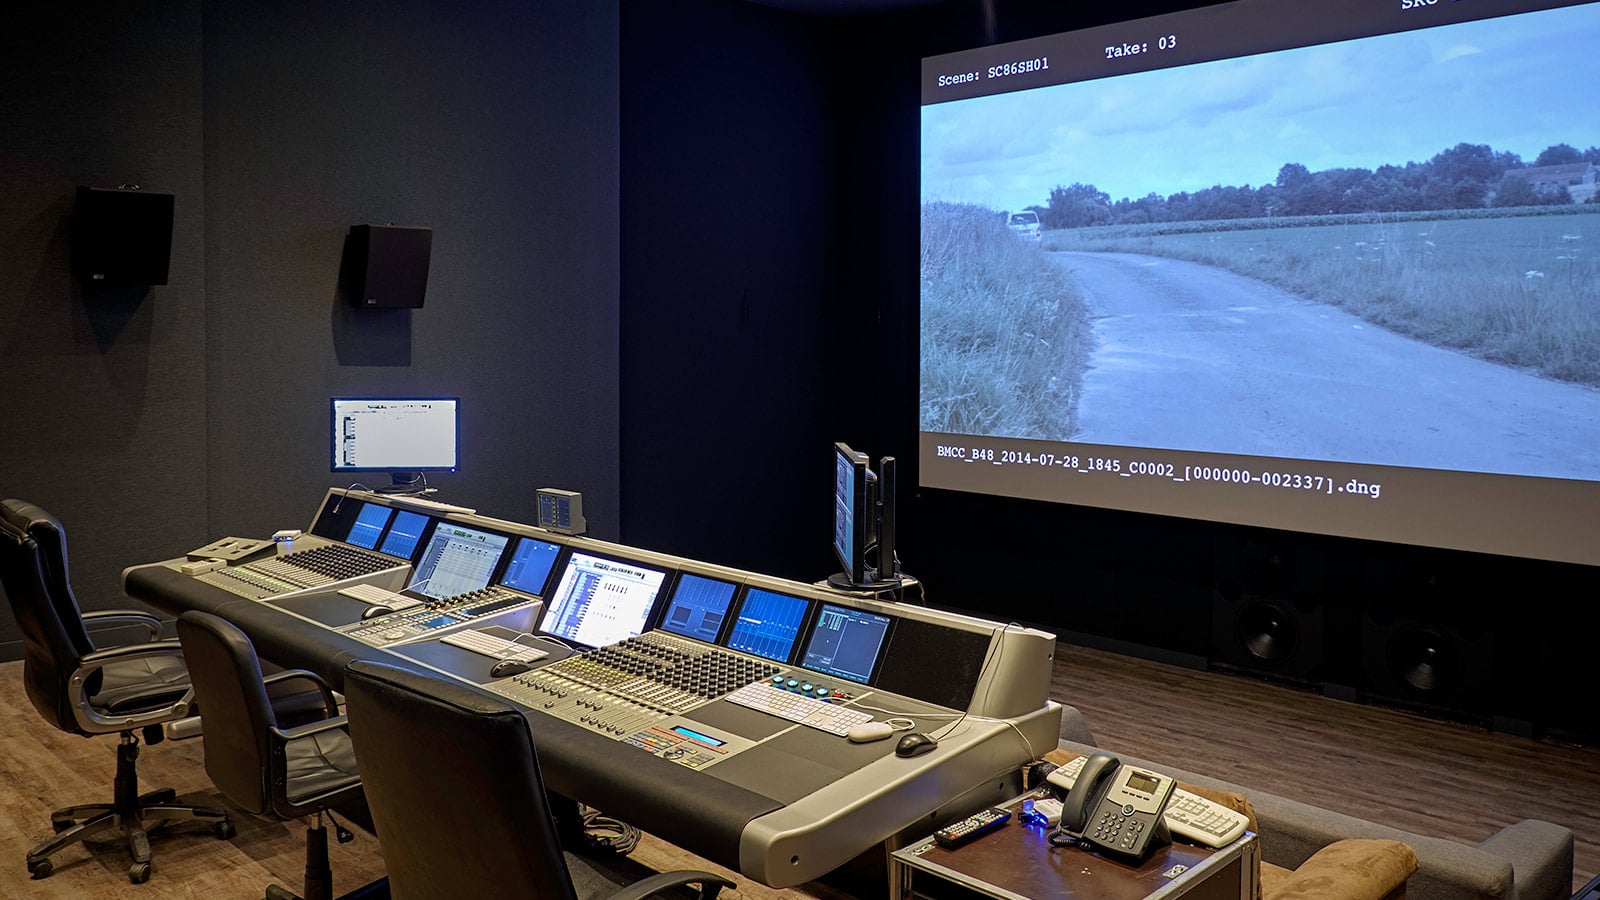 France's Film Factory Adds Second Meyer Sound Cinema System: 